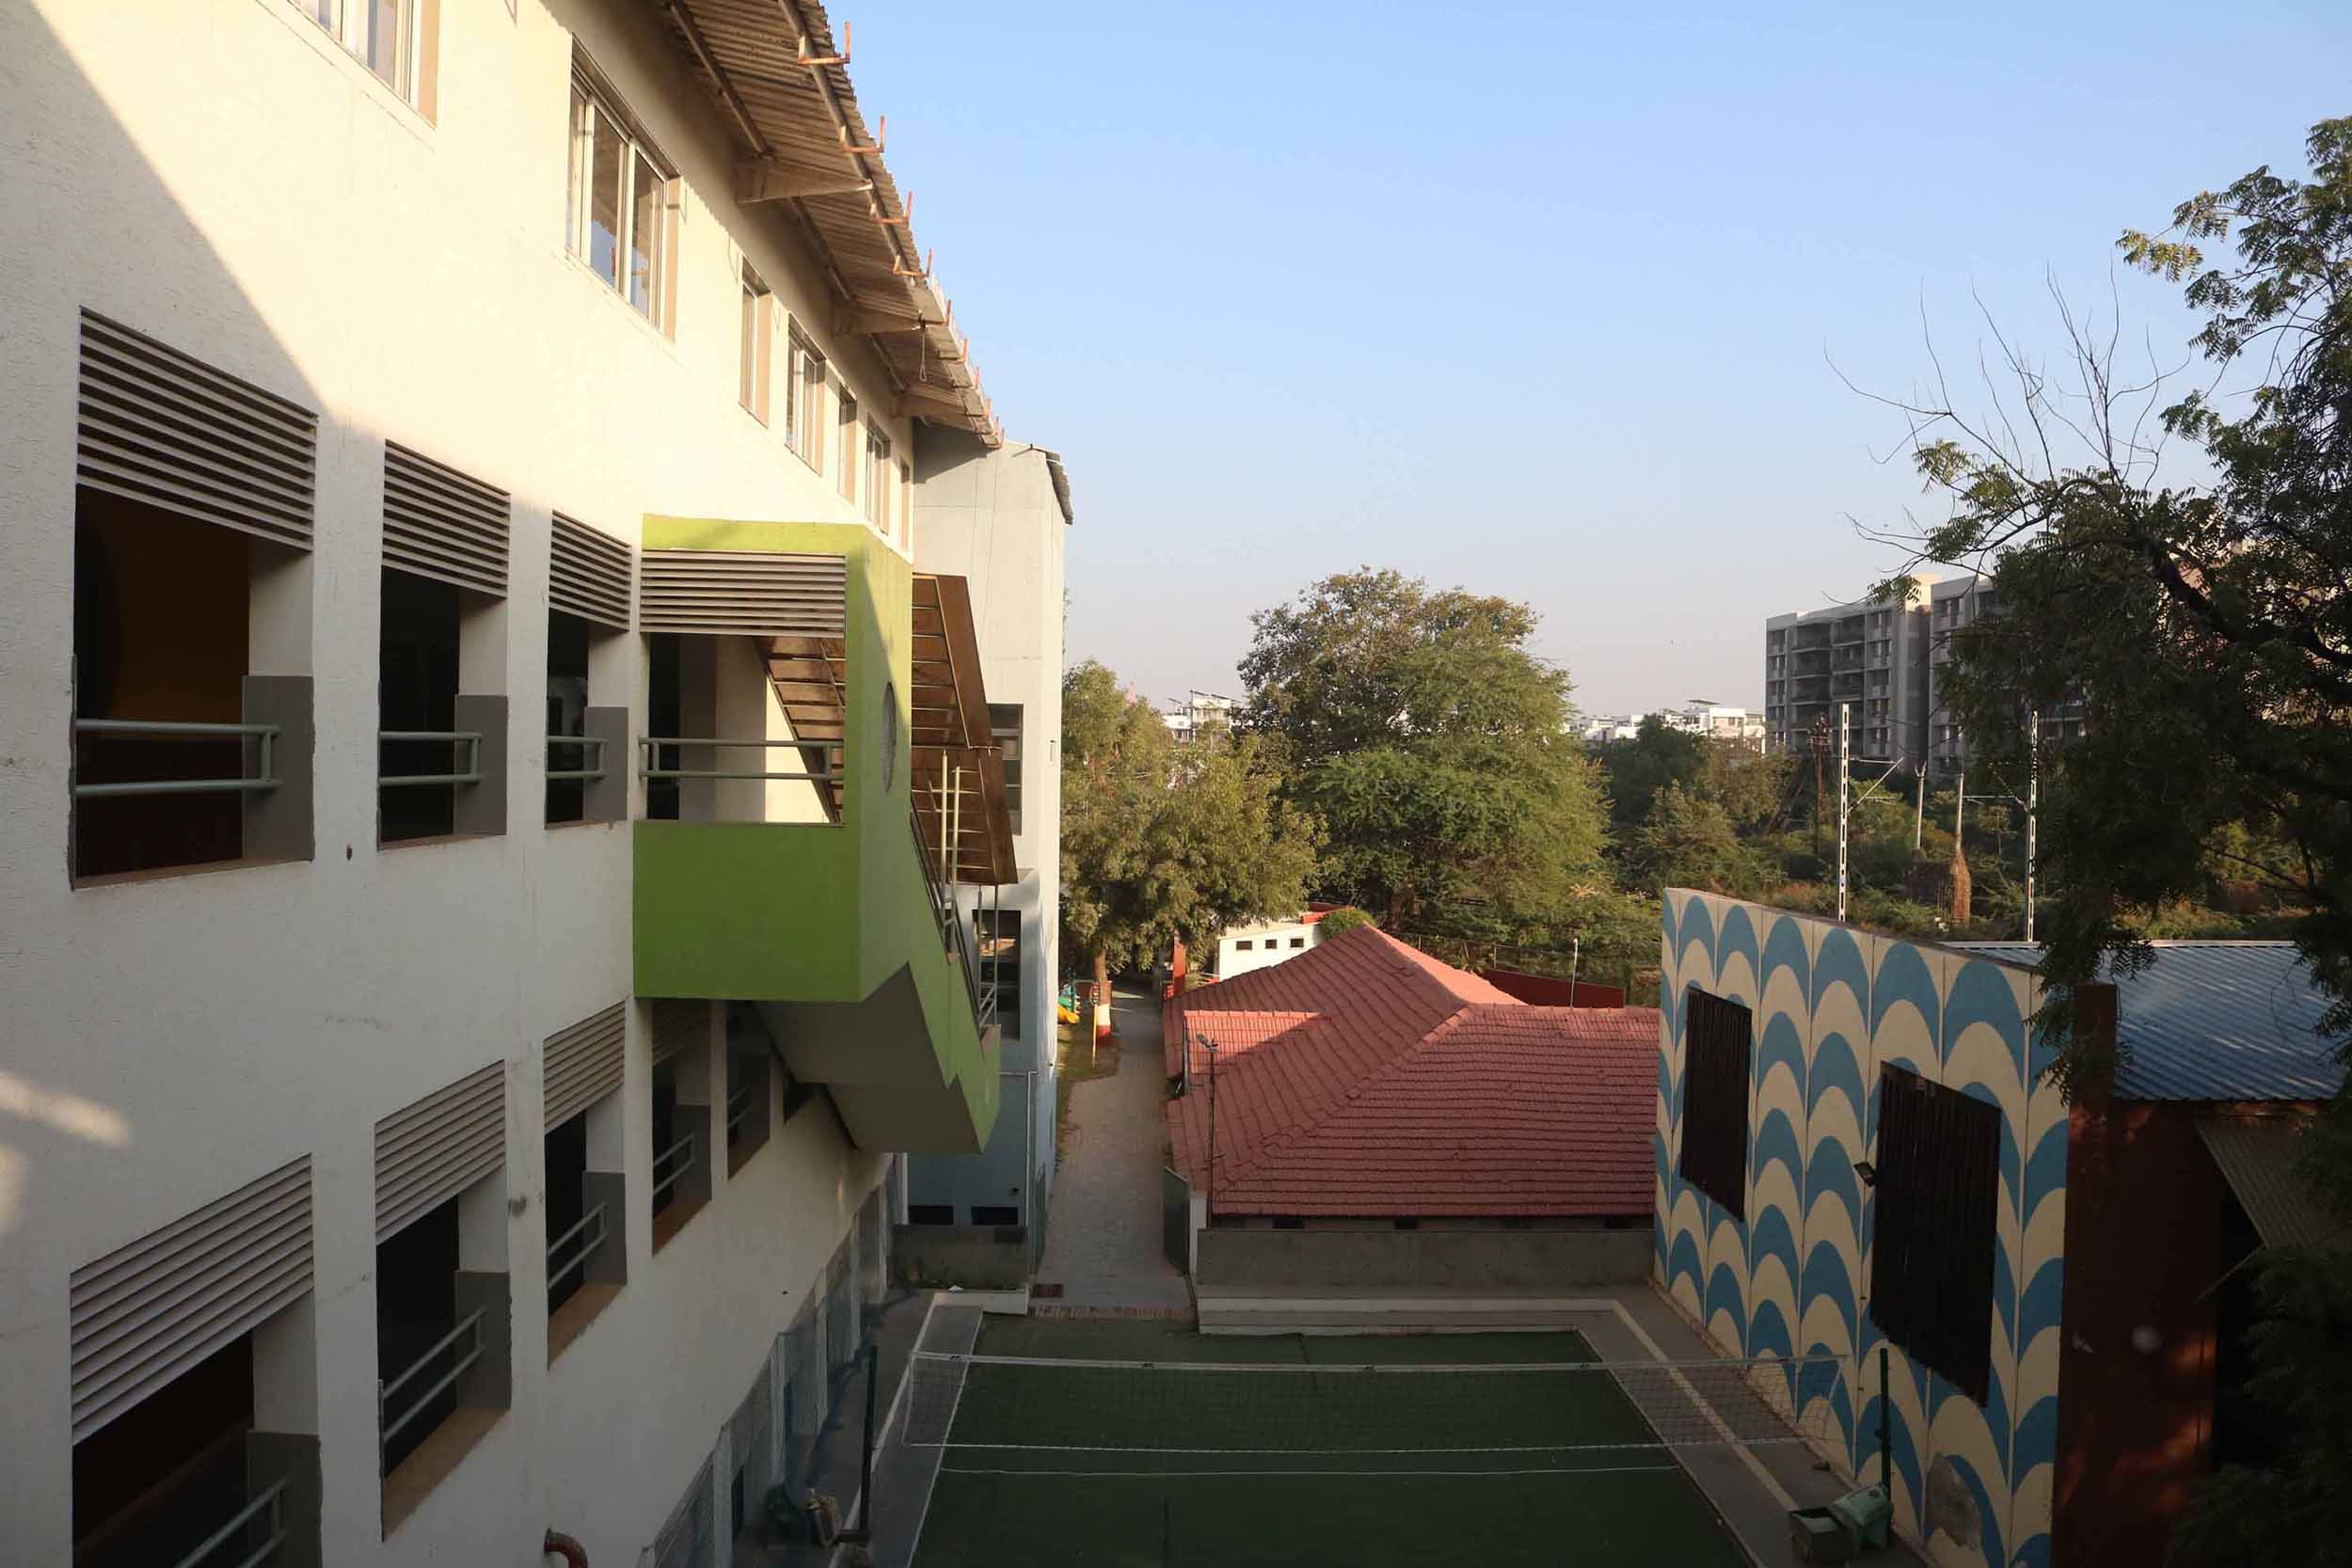 No holiday on Ram Navami; Anand Niketan school gets notice